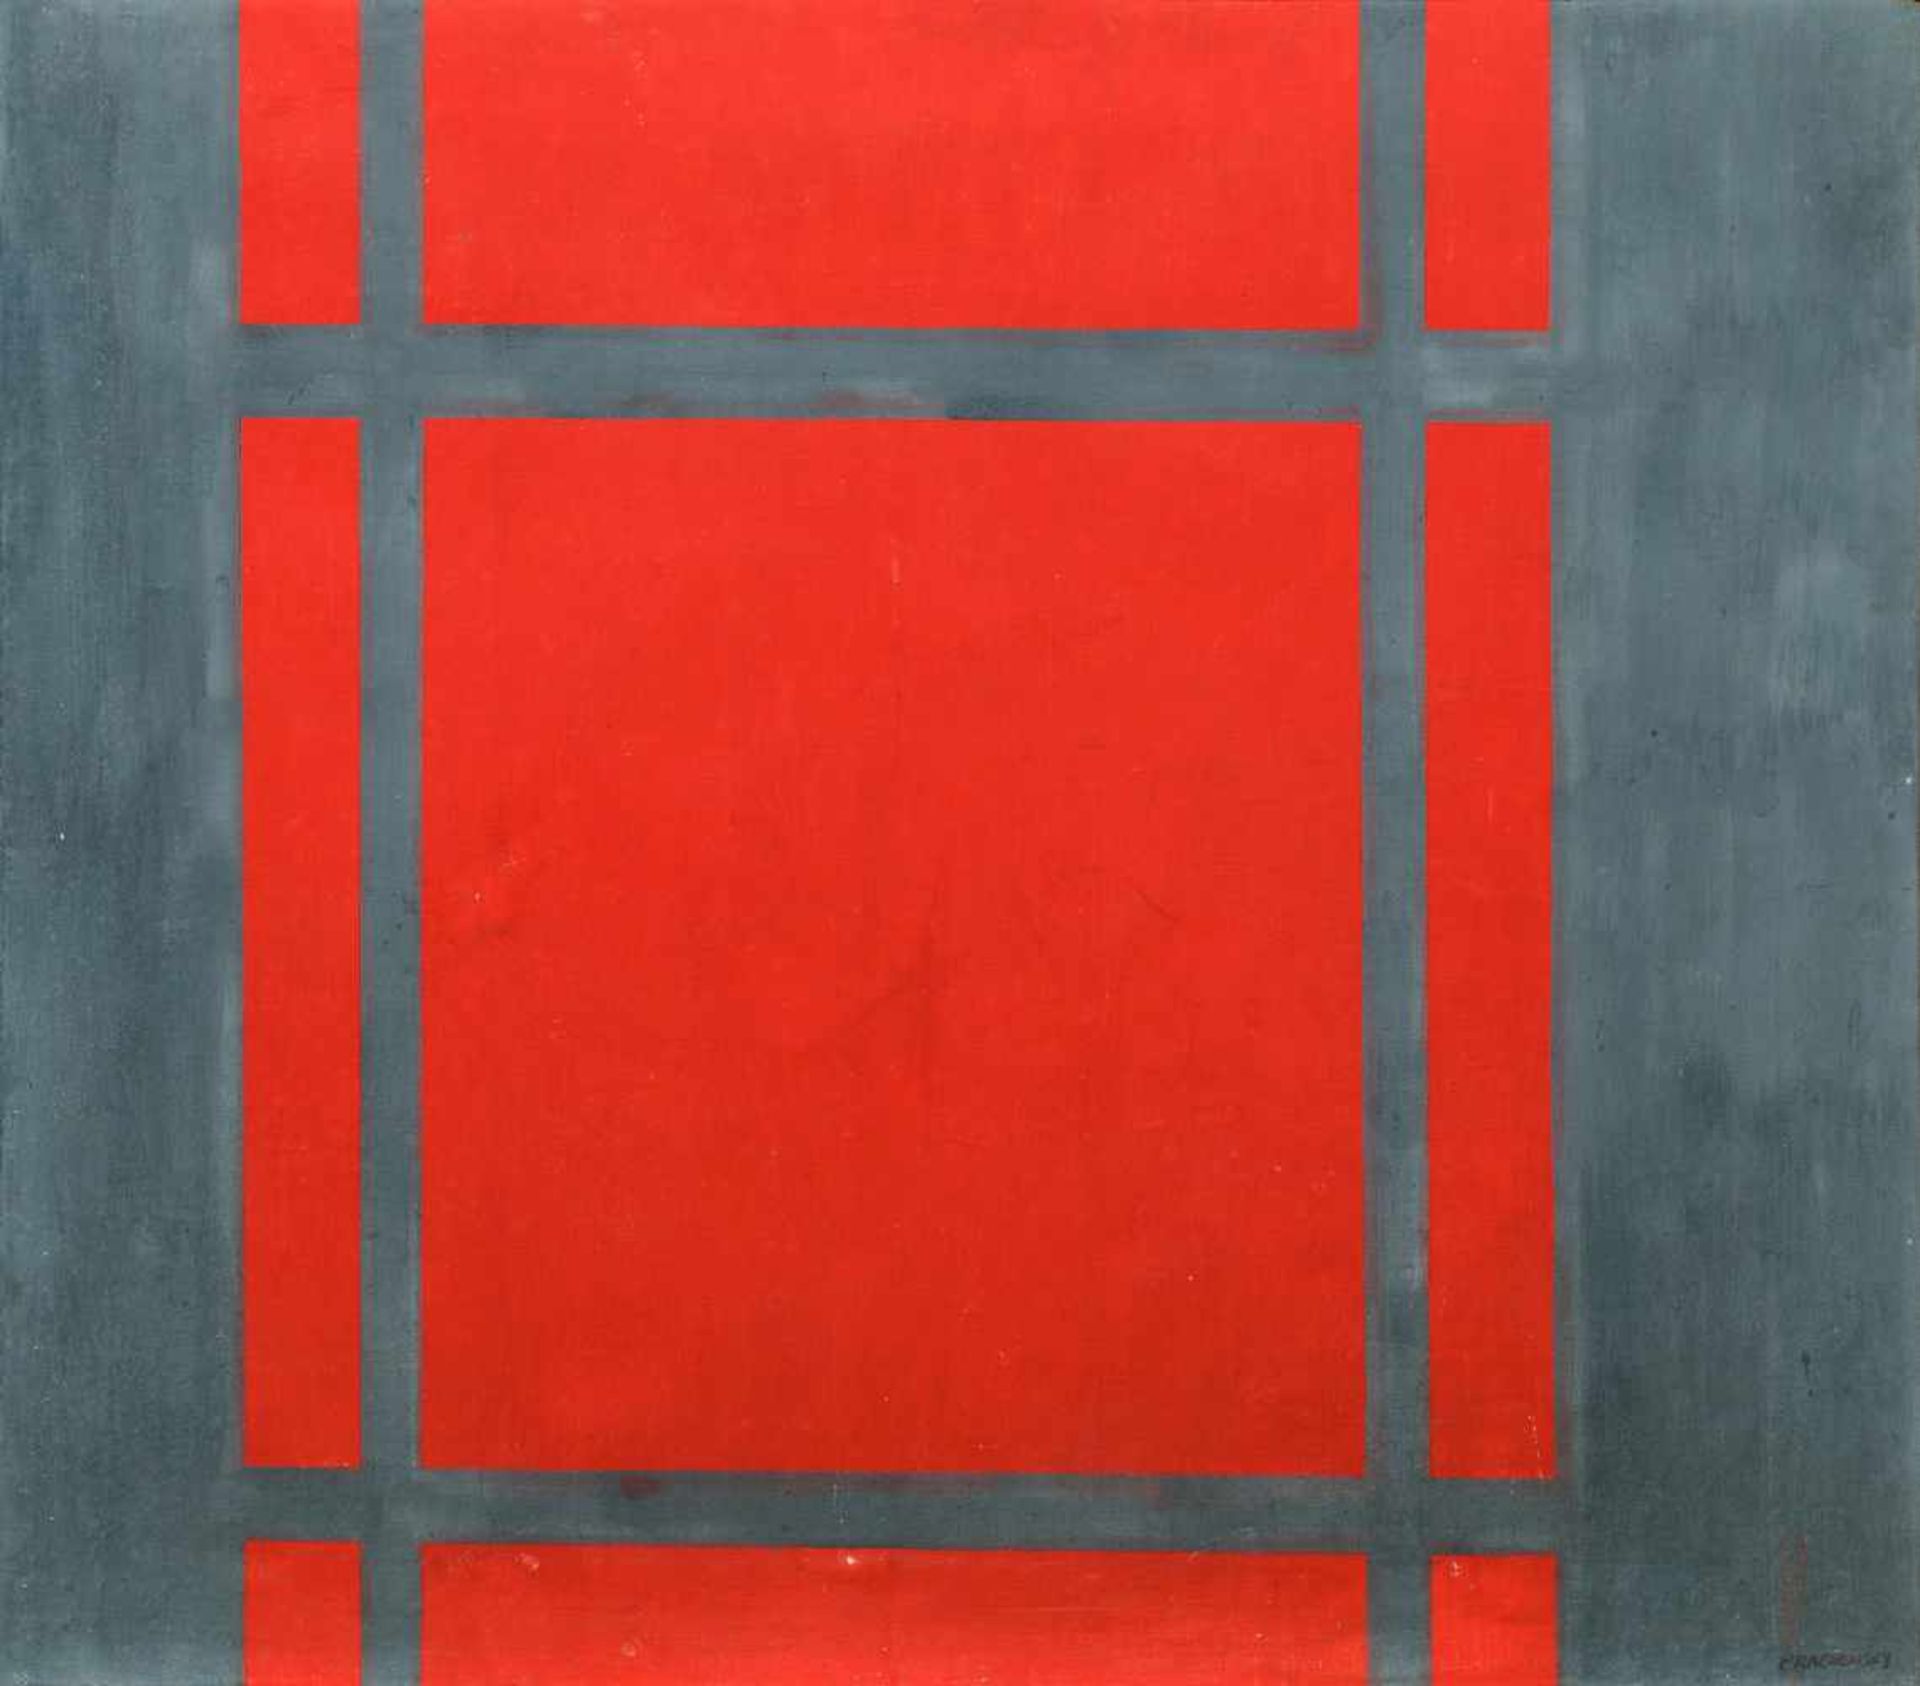 Markus PrachenskyInnsbruck 1932 - 2011 WienKomposition Rot auf GrauÖl auf Leinwand / oil on canvas73